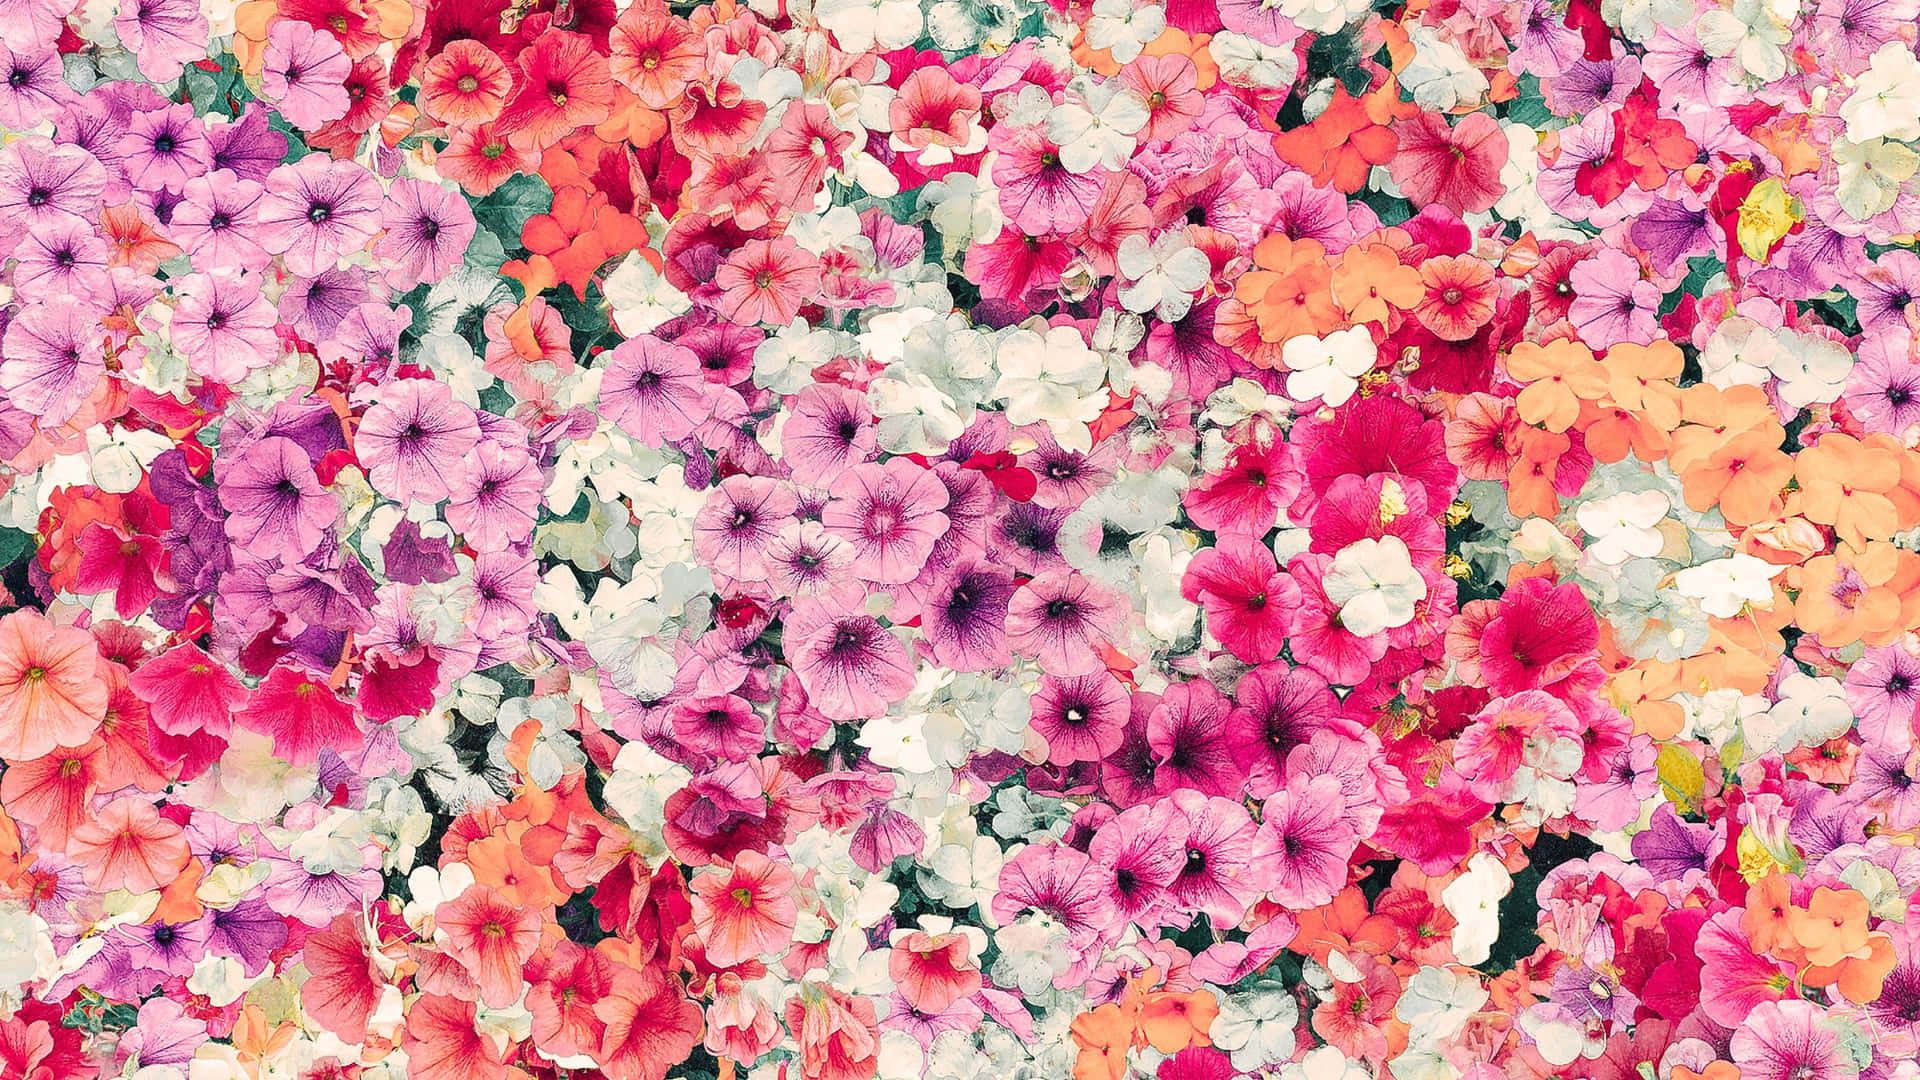 Vibrant Floral Explosion.jpg Wallpaper